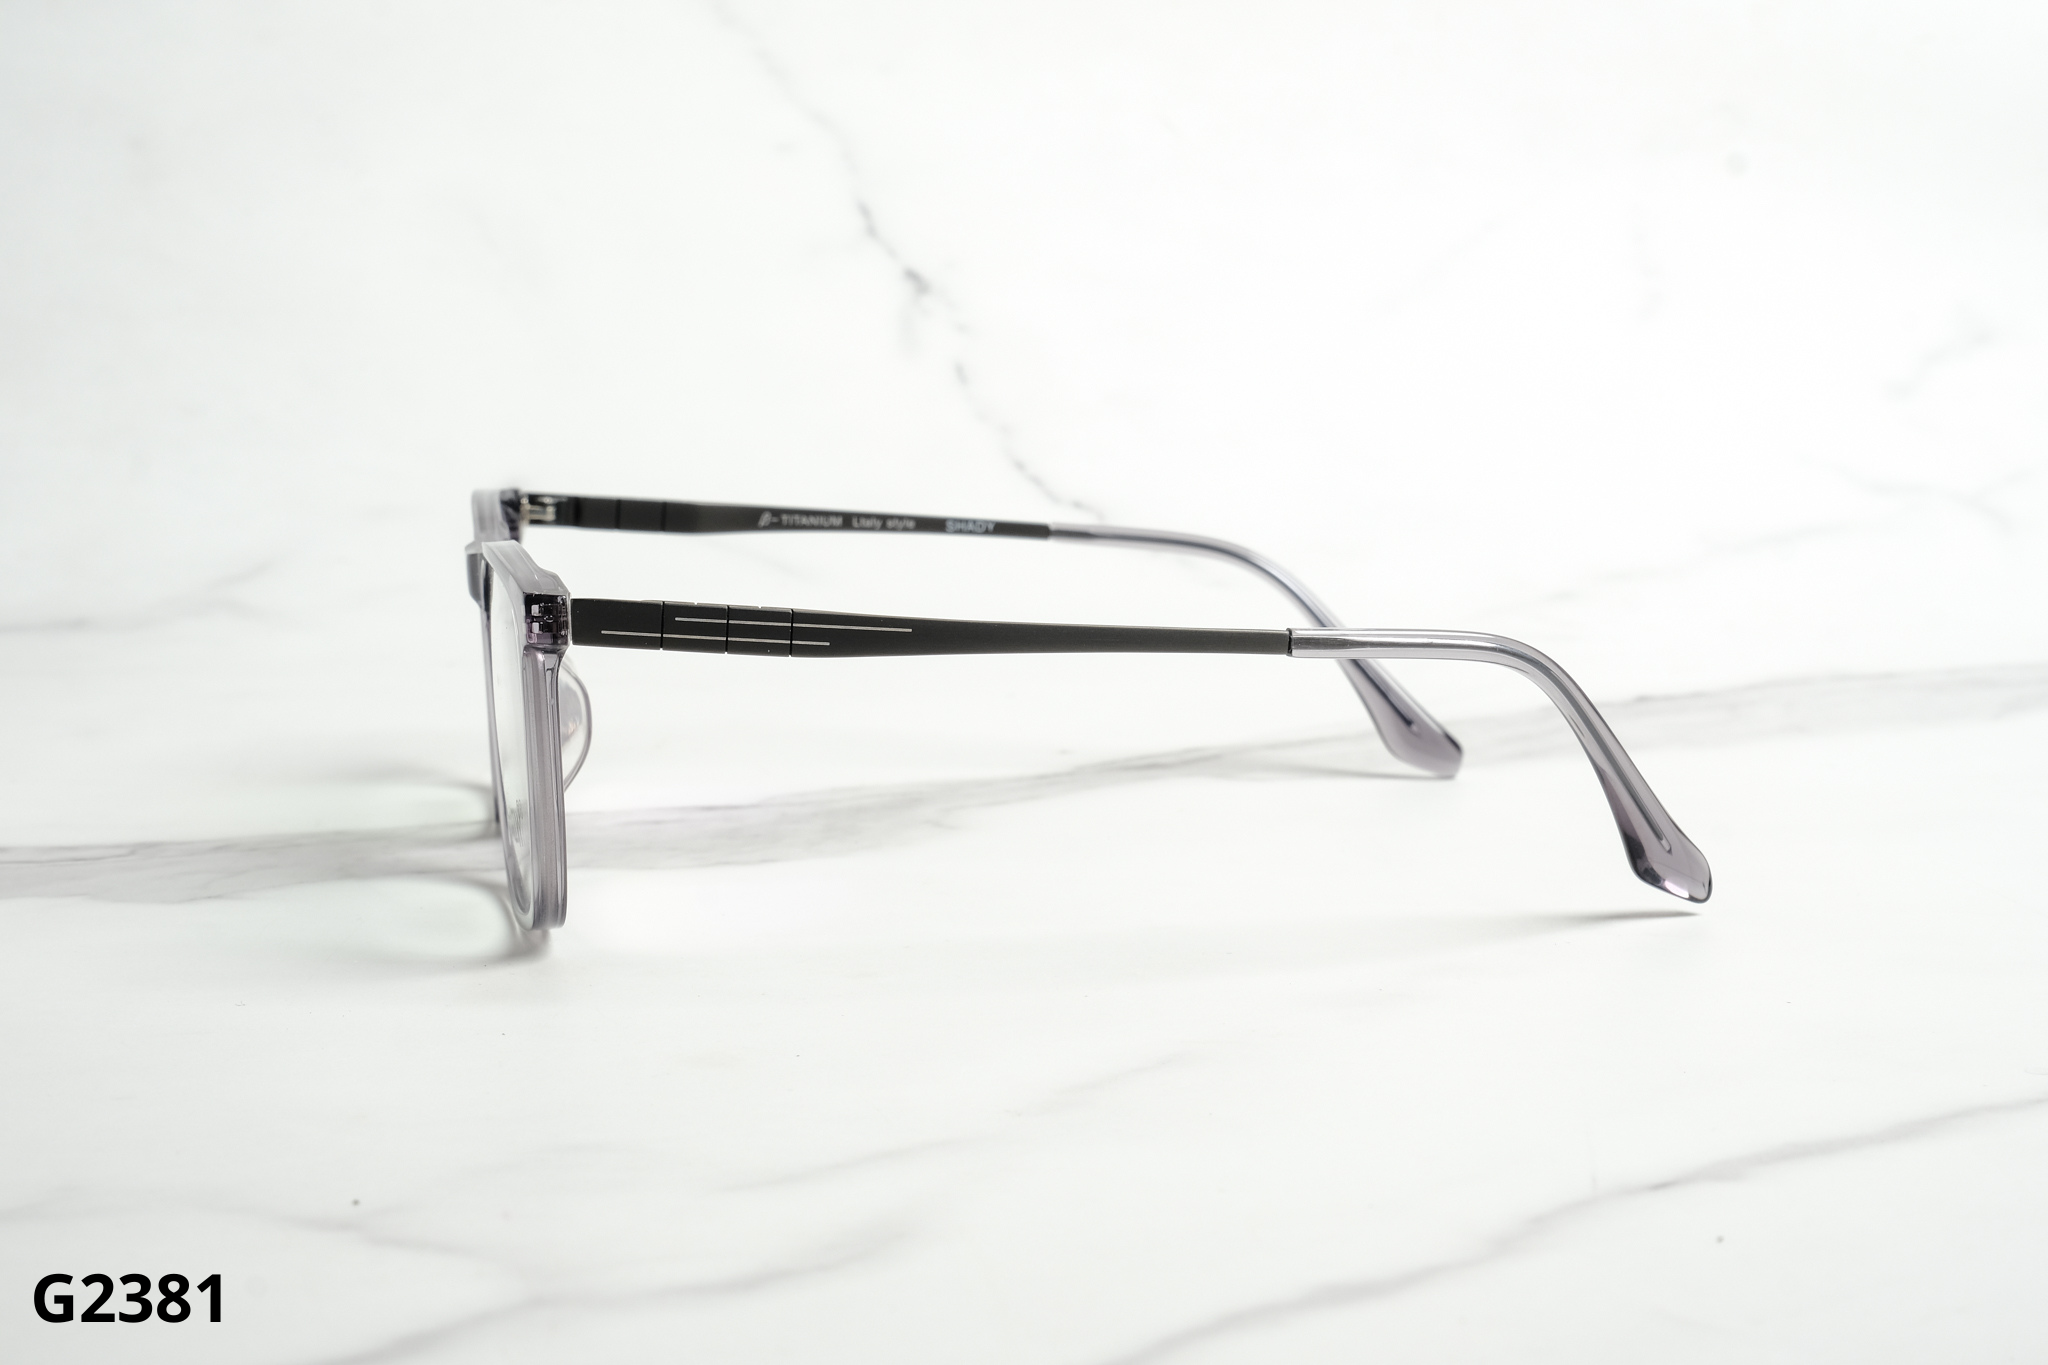  SHADY Eyewear - Glasses - G2381 